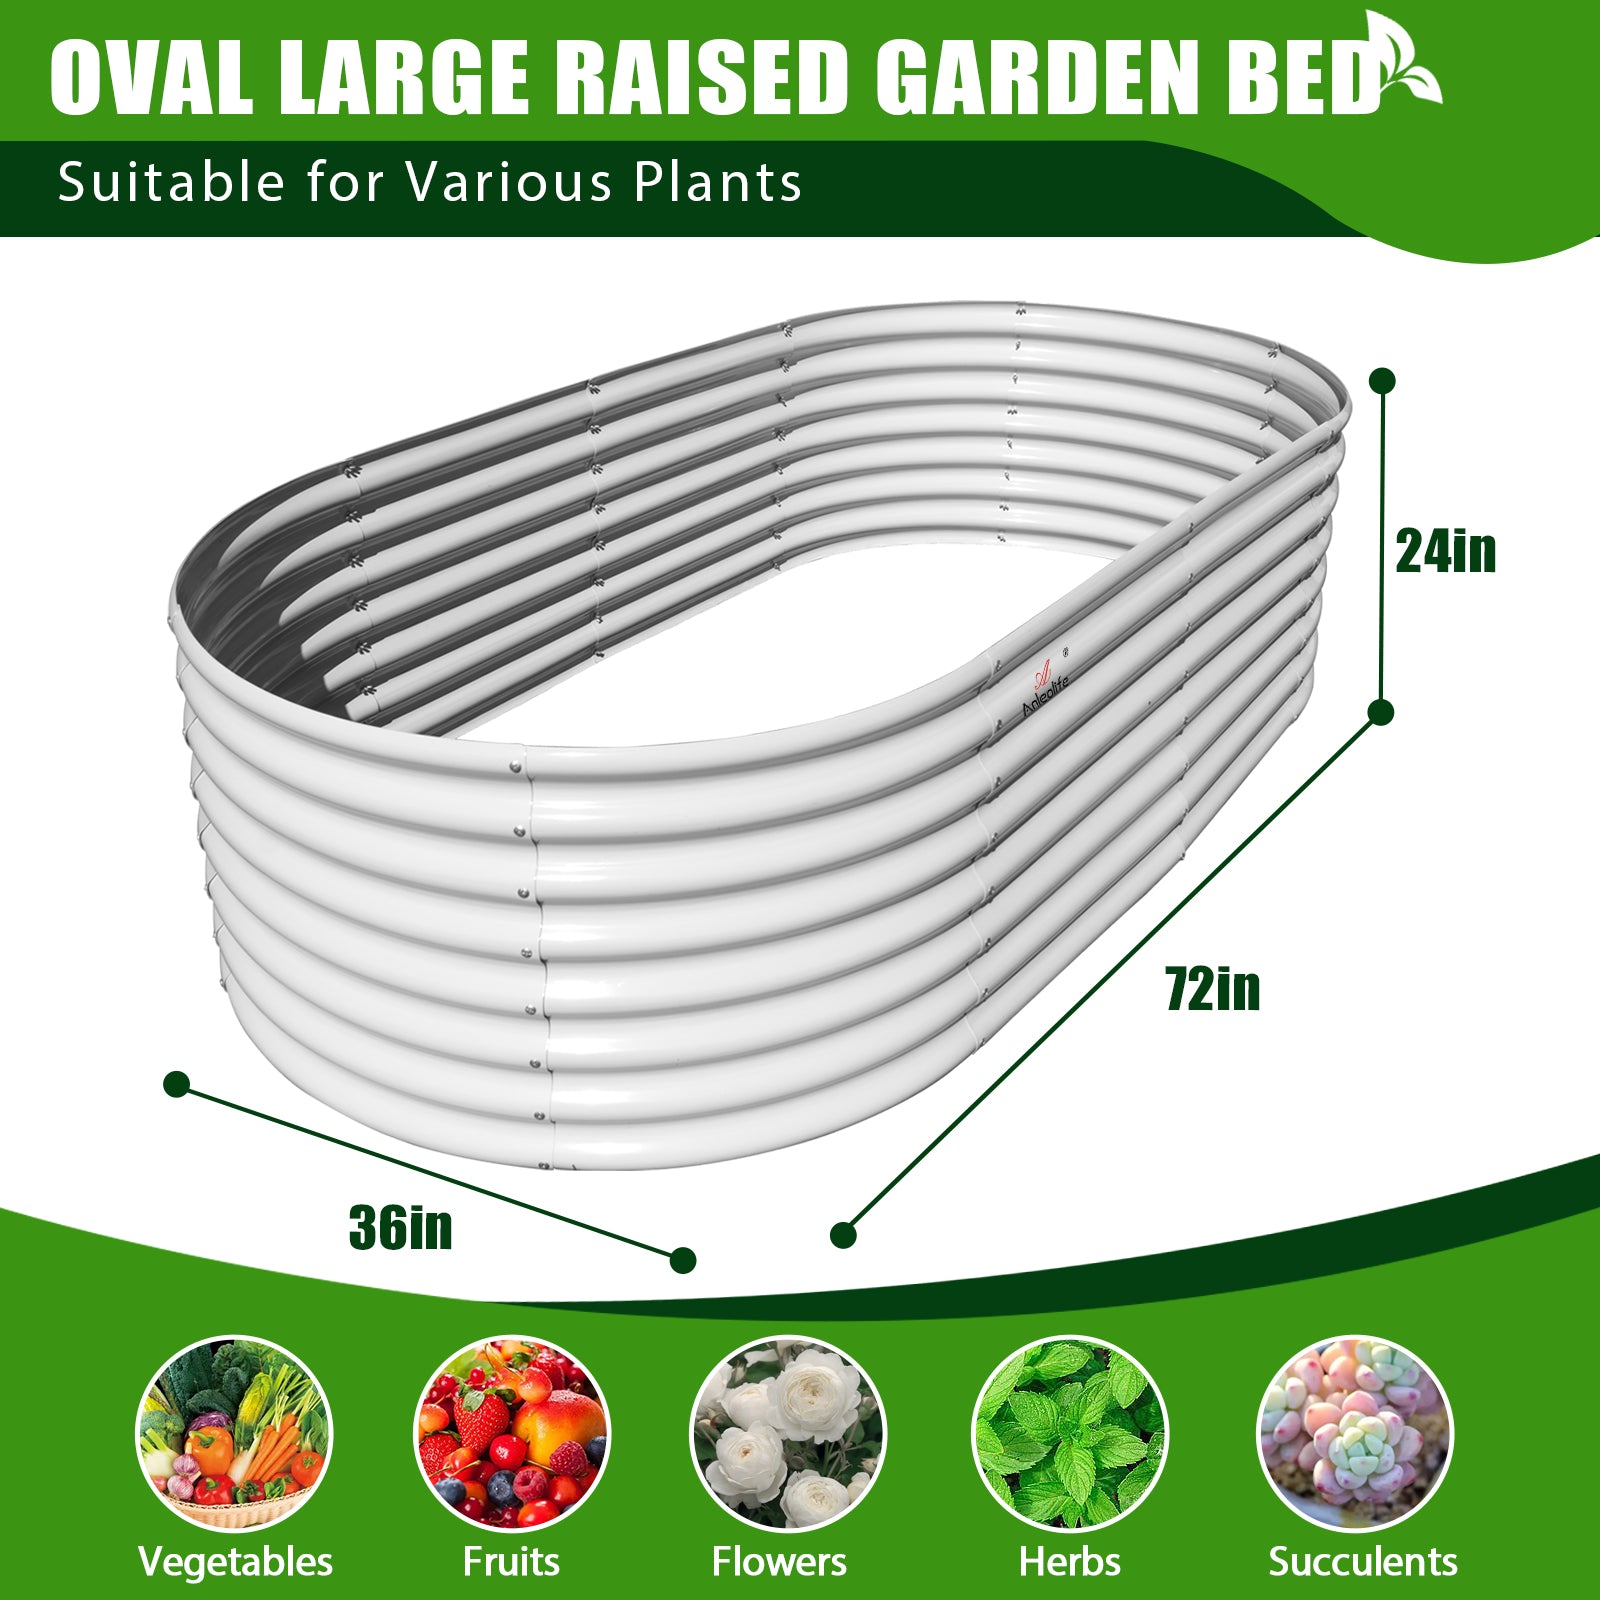 6x3x2ft Oval Metal Raised Modular Garden Bed (White)